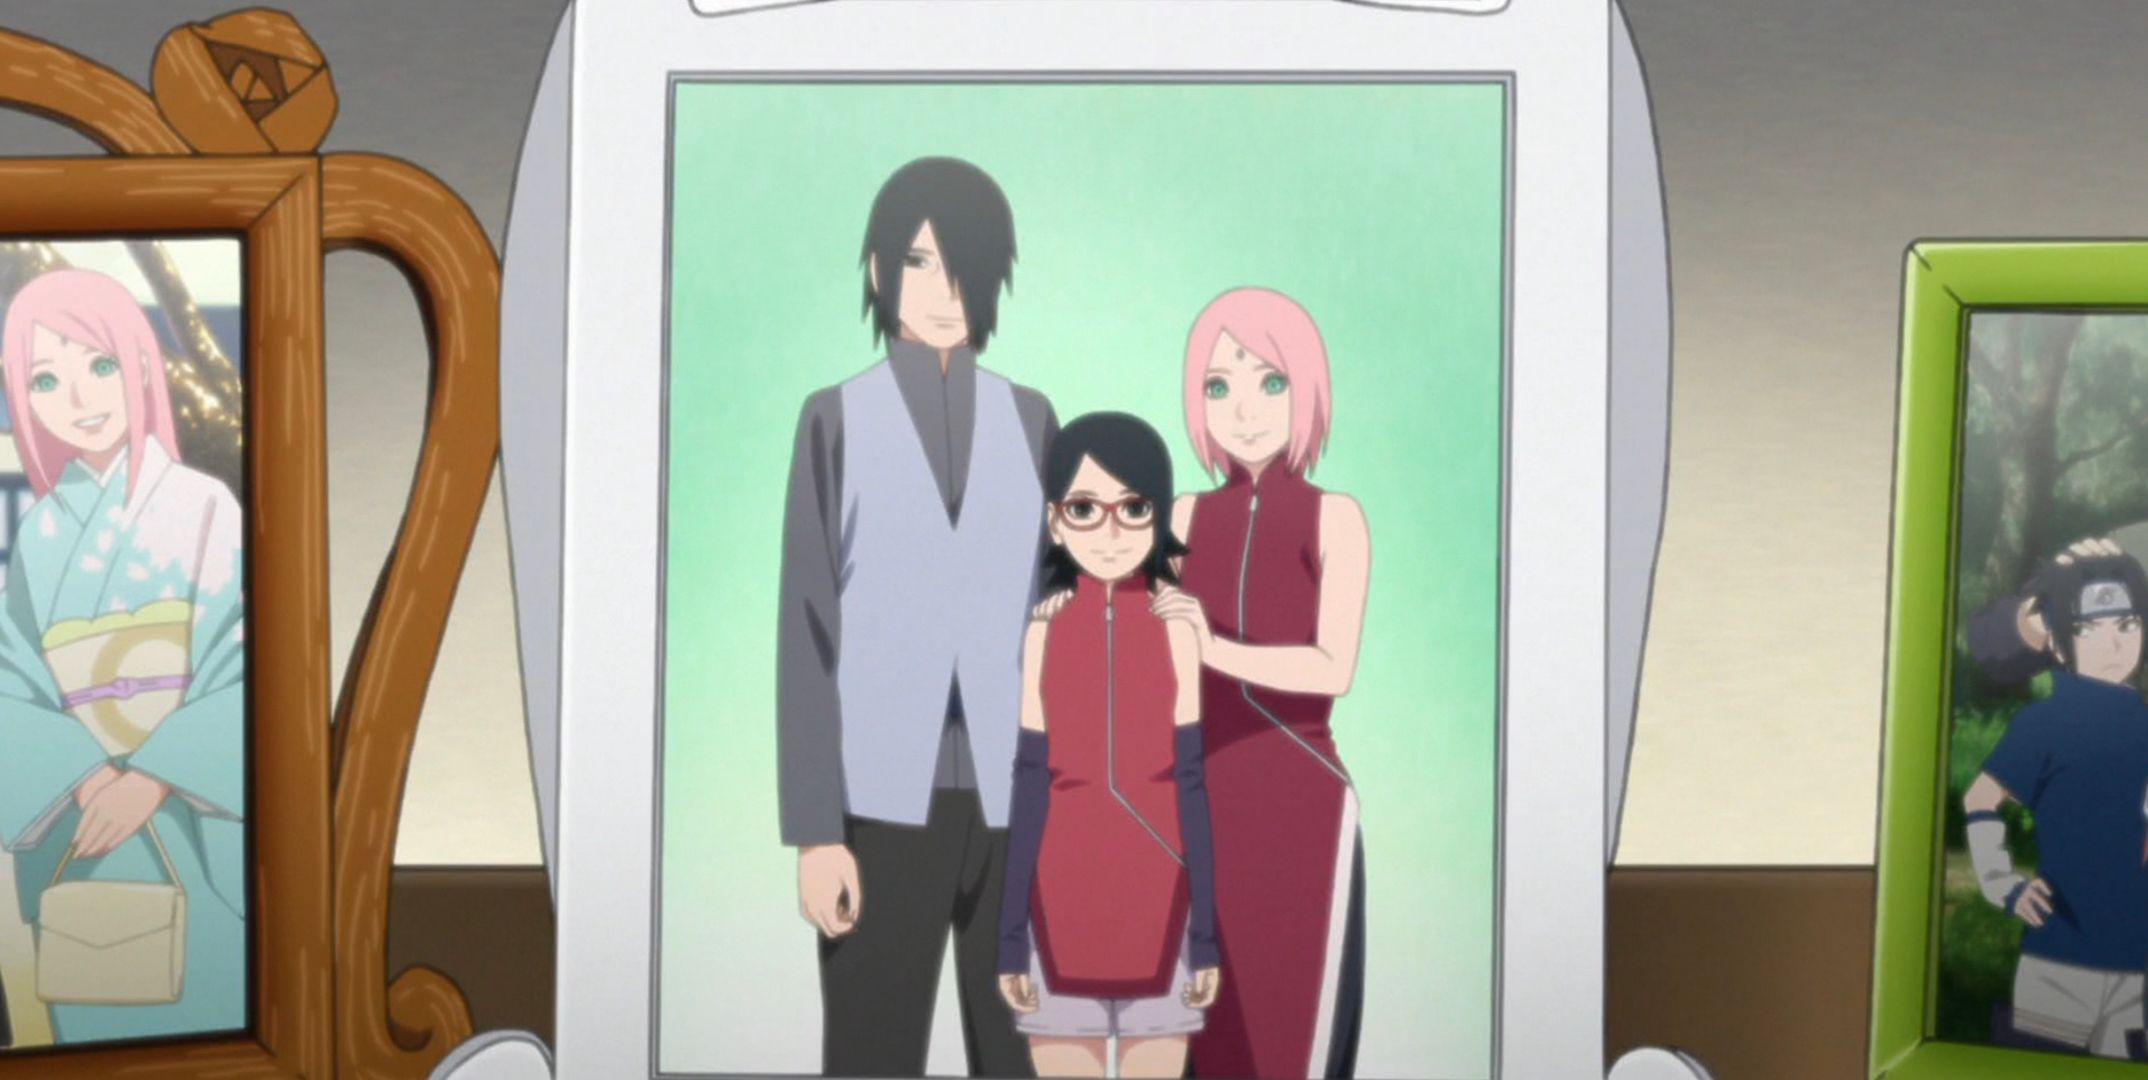 A framed family photo features Sasuke and Sakura behind Saradann Boruto